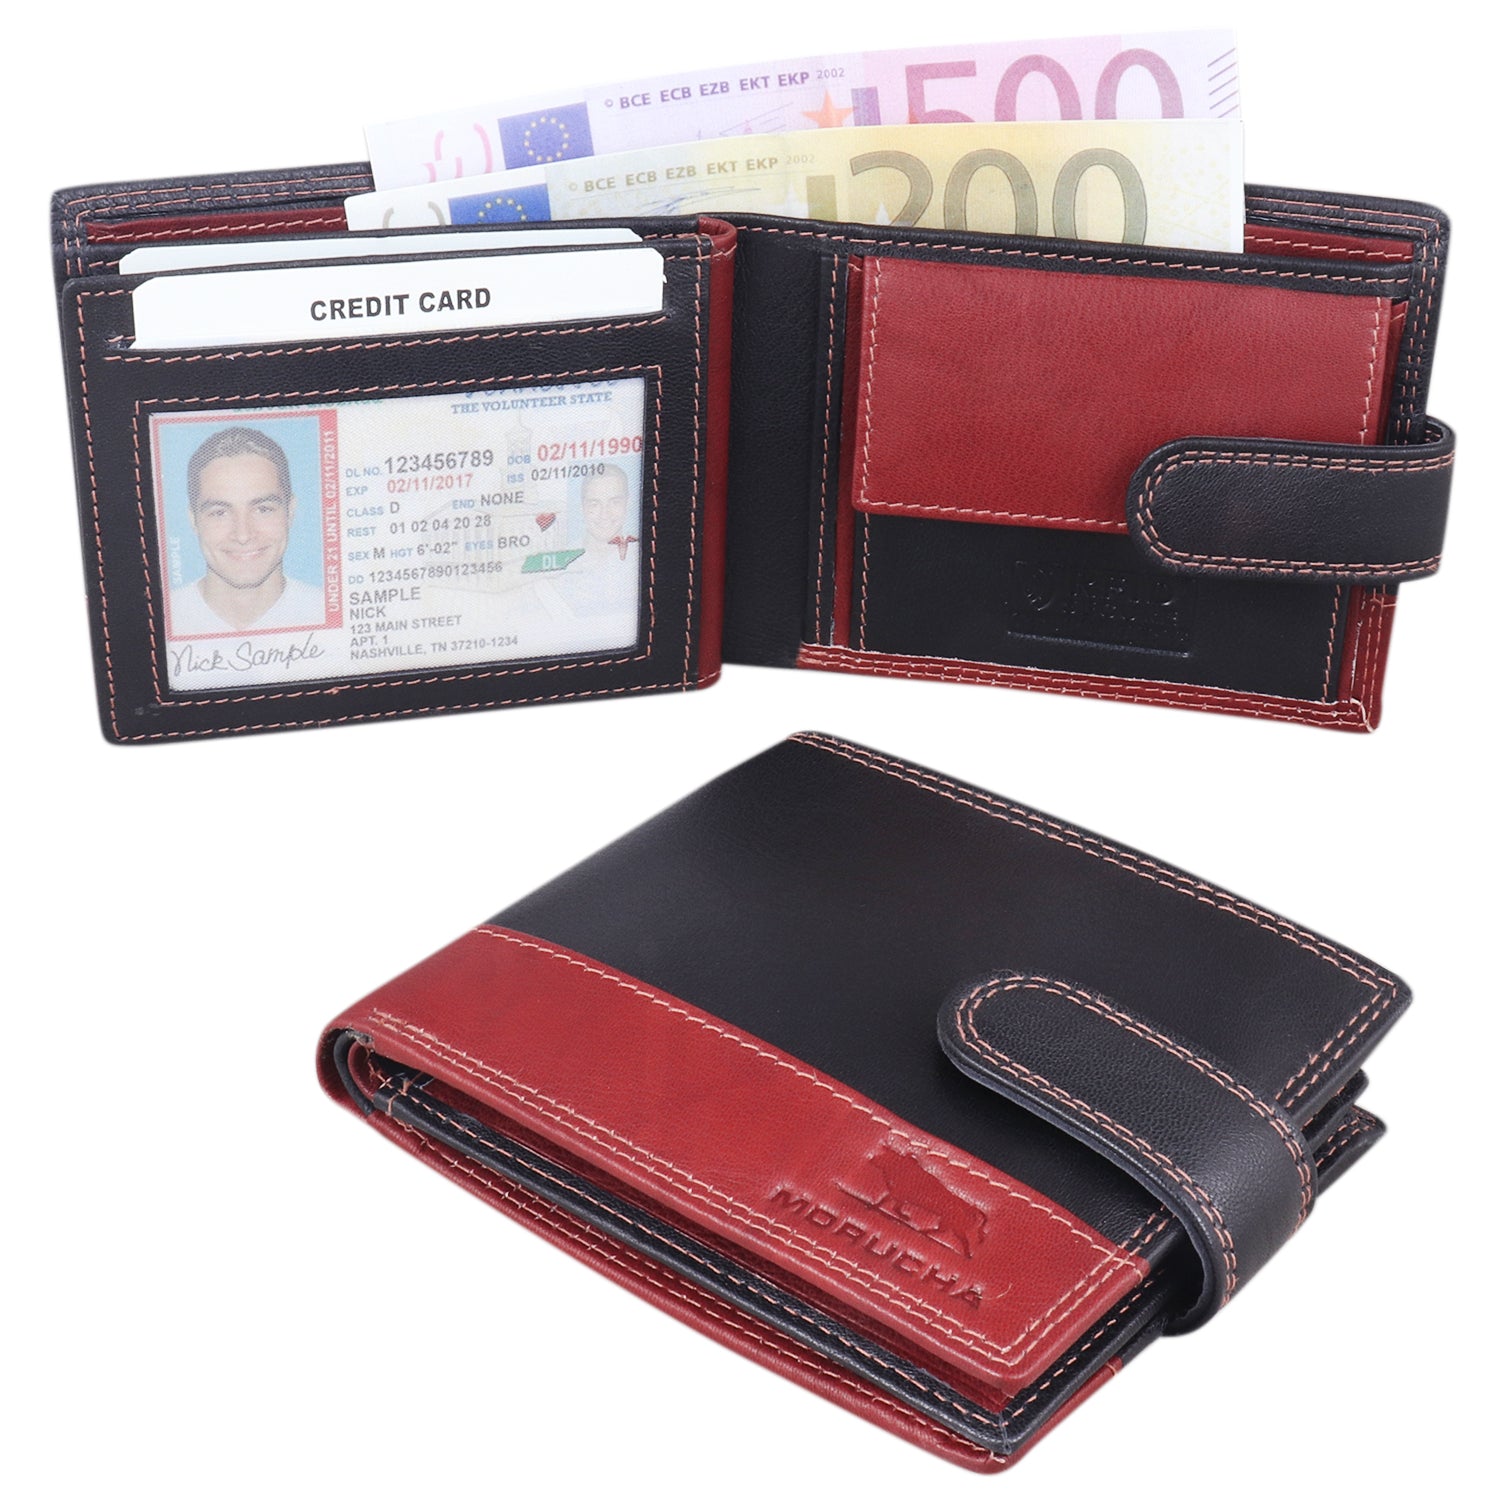 STARHIDE Handmade Wallets for Men UK, Genuine Distressed Hunter Leather, RFID Blocking Notecase Wallet, Coins and Id Card Holder